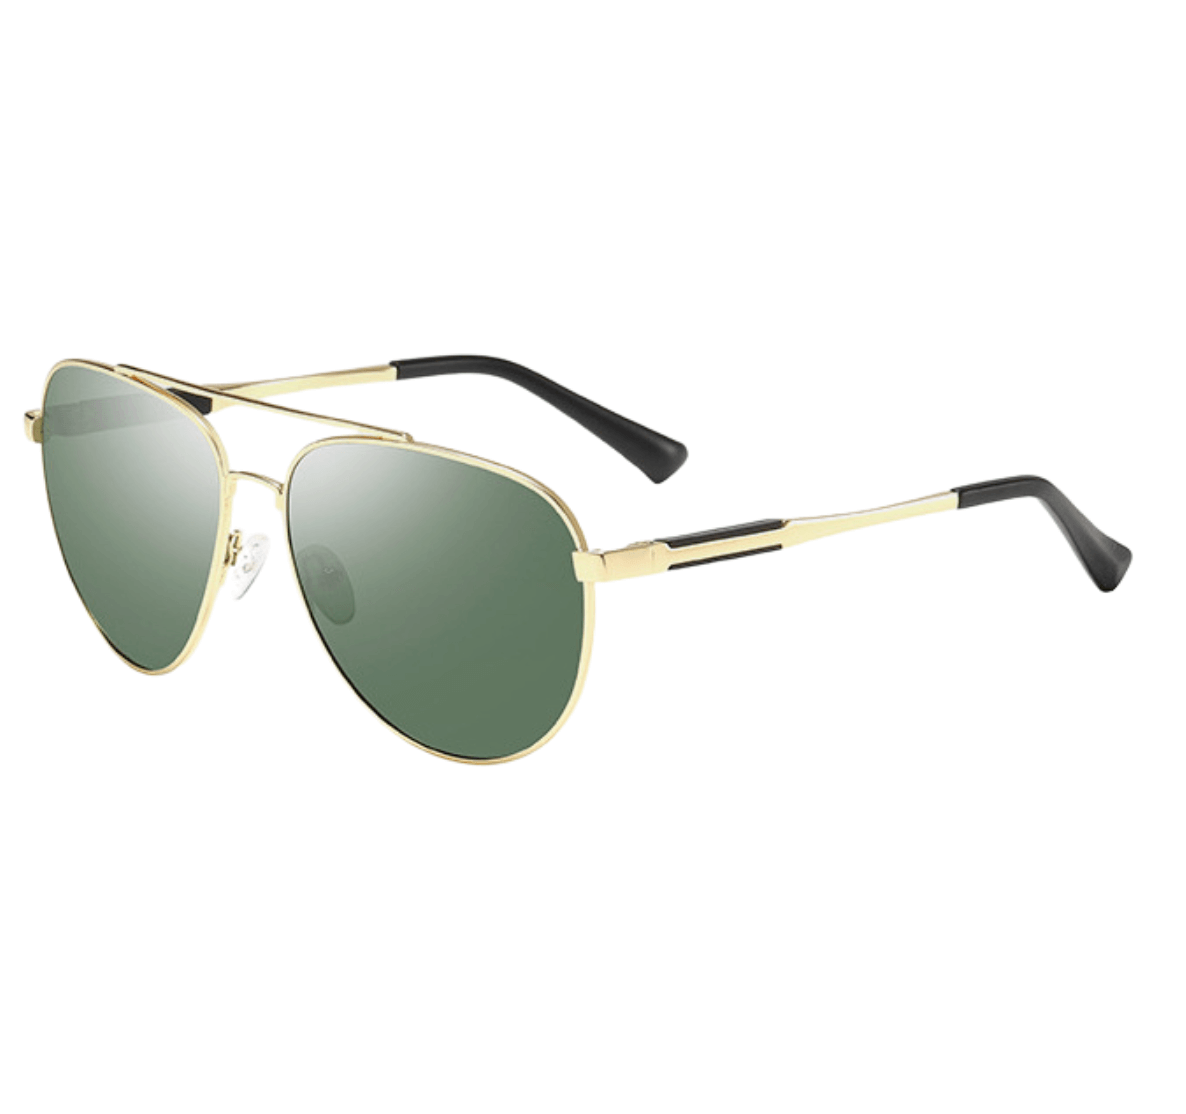 Wholesale Aviator Sunglasses, high quality sunglasses wholesale, aviator sunglasses manufacturer, aviator sunglasses China